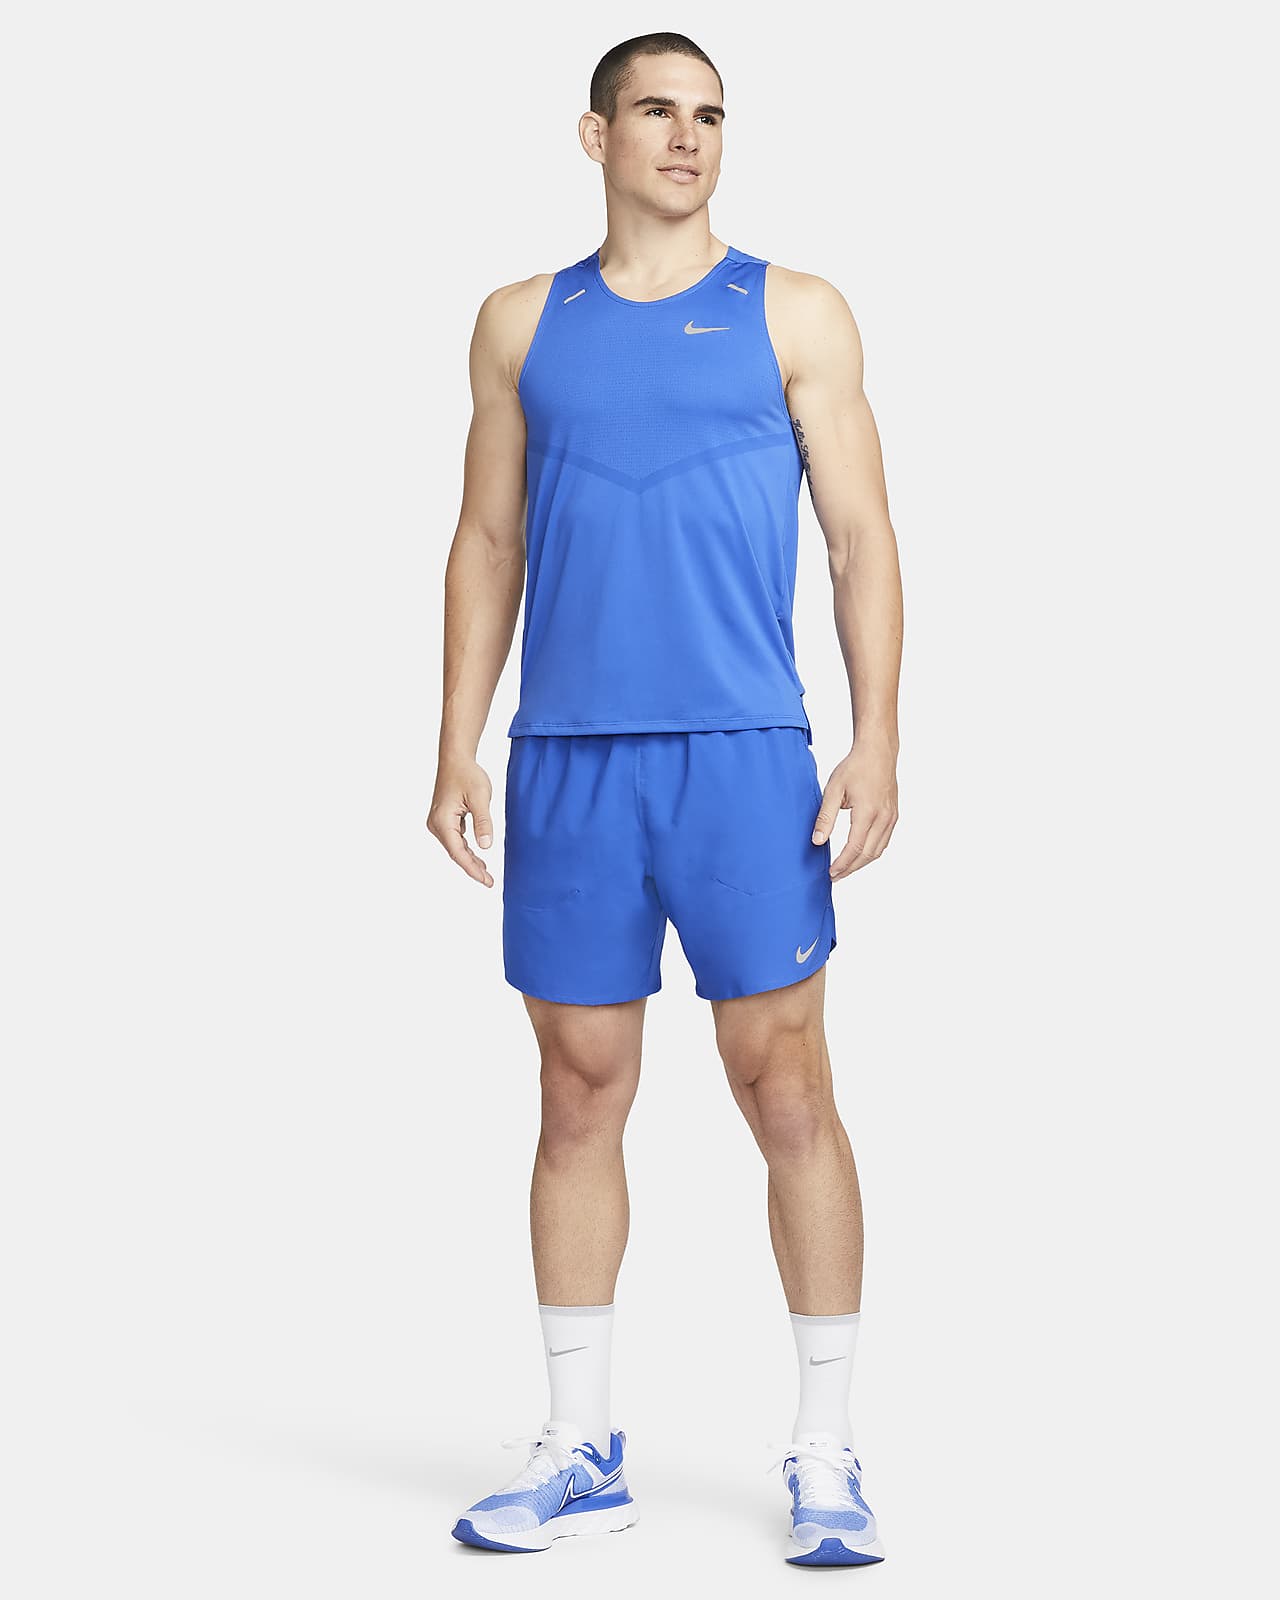 Nike Distance Men's 5 Running Shorts, Men's jogging shorts